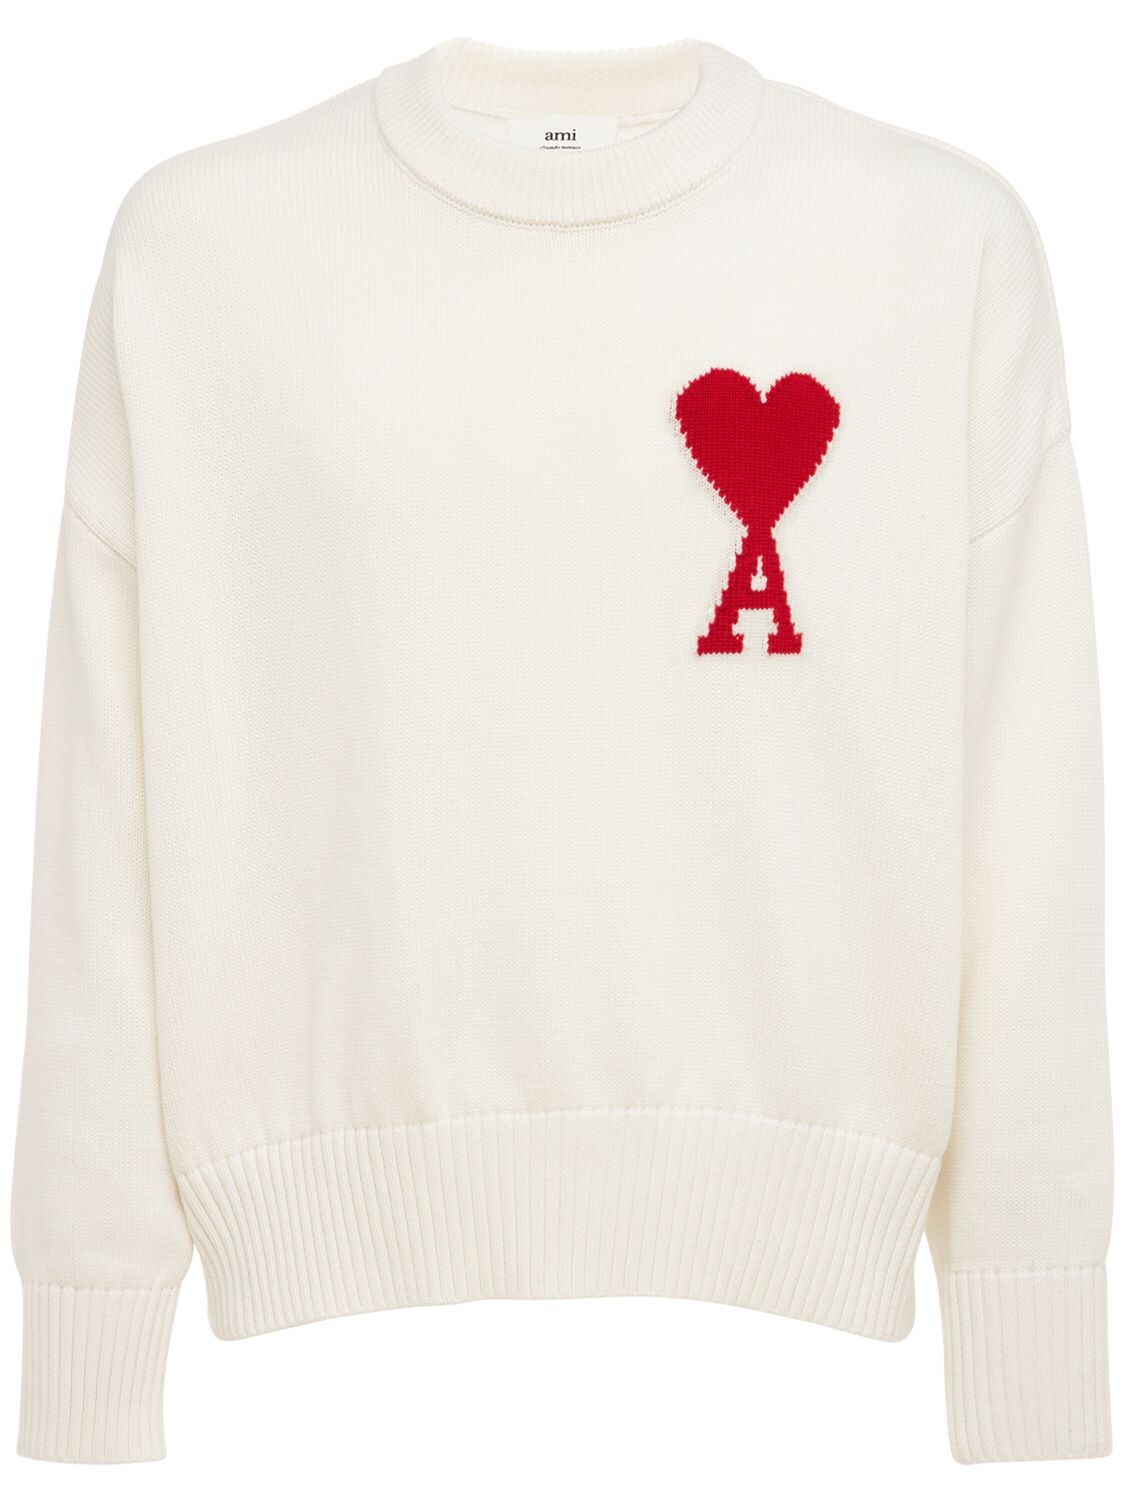 AMI PARIS Logo Over Cotton & Wool Knit Sweater